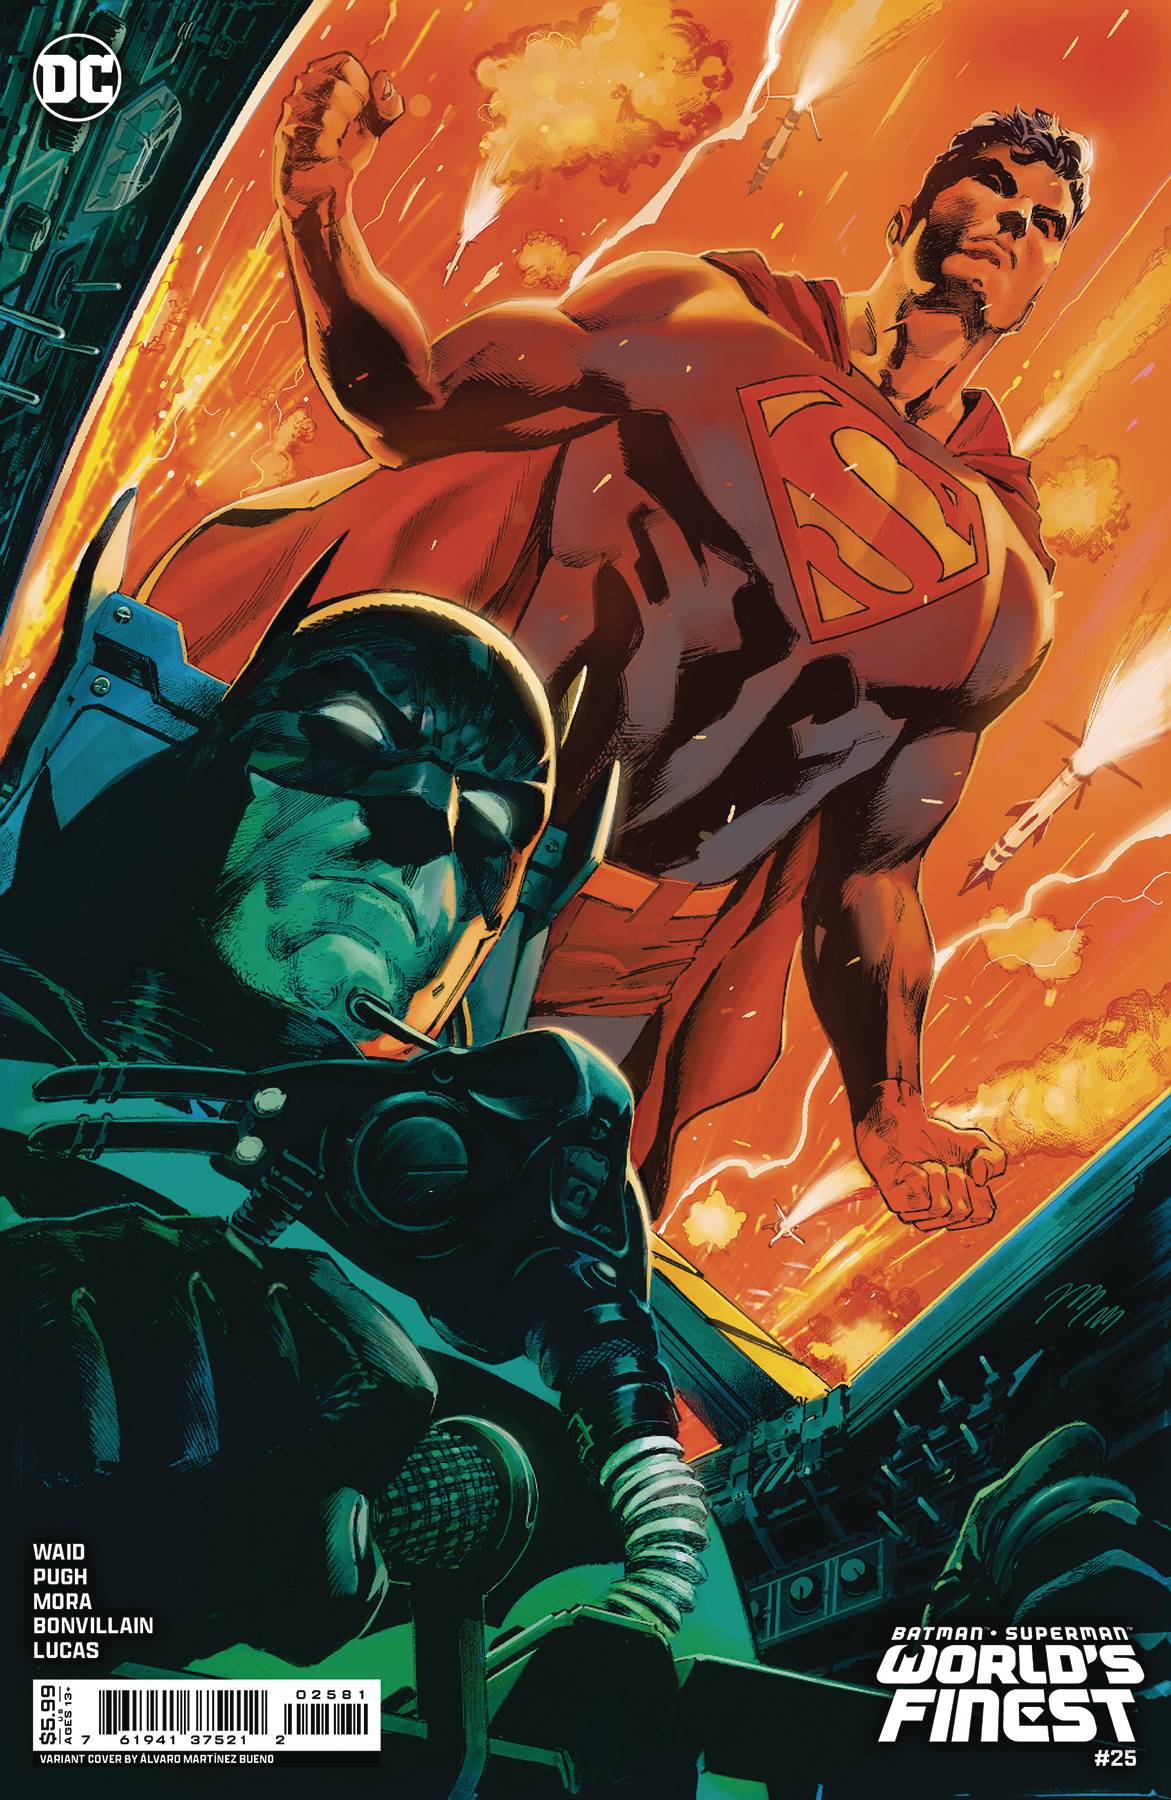 BATMAN SUPERMAN WORLDS FINEST #25 CVR F MARTINEZ BUENO - PRE ORDER [FOC 24.02]